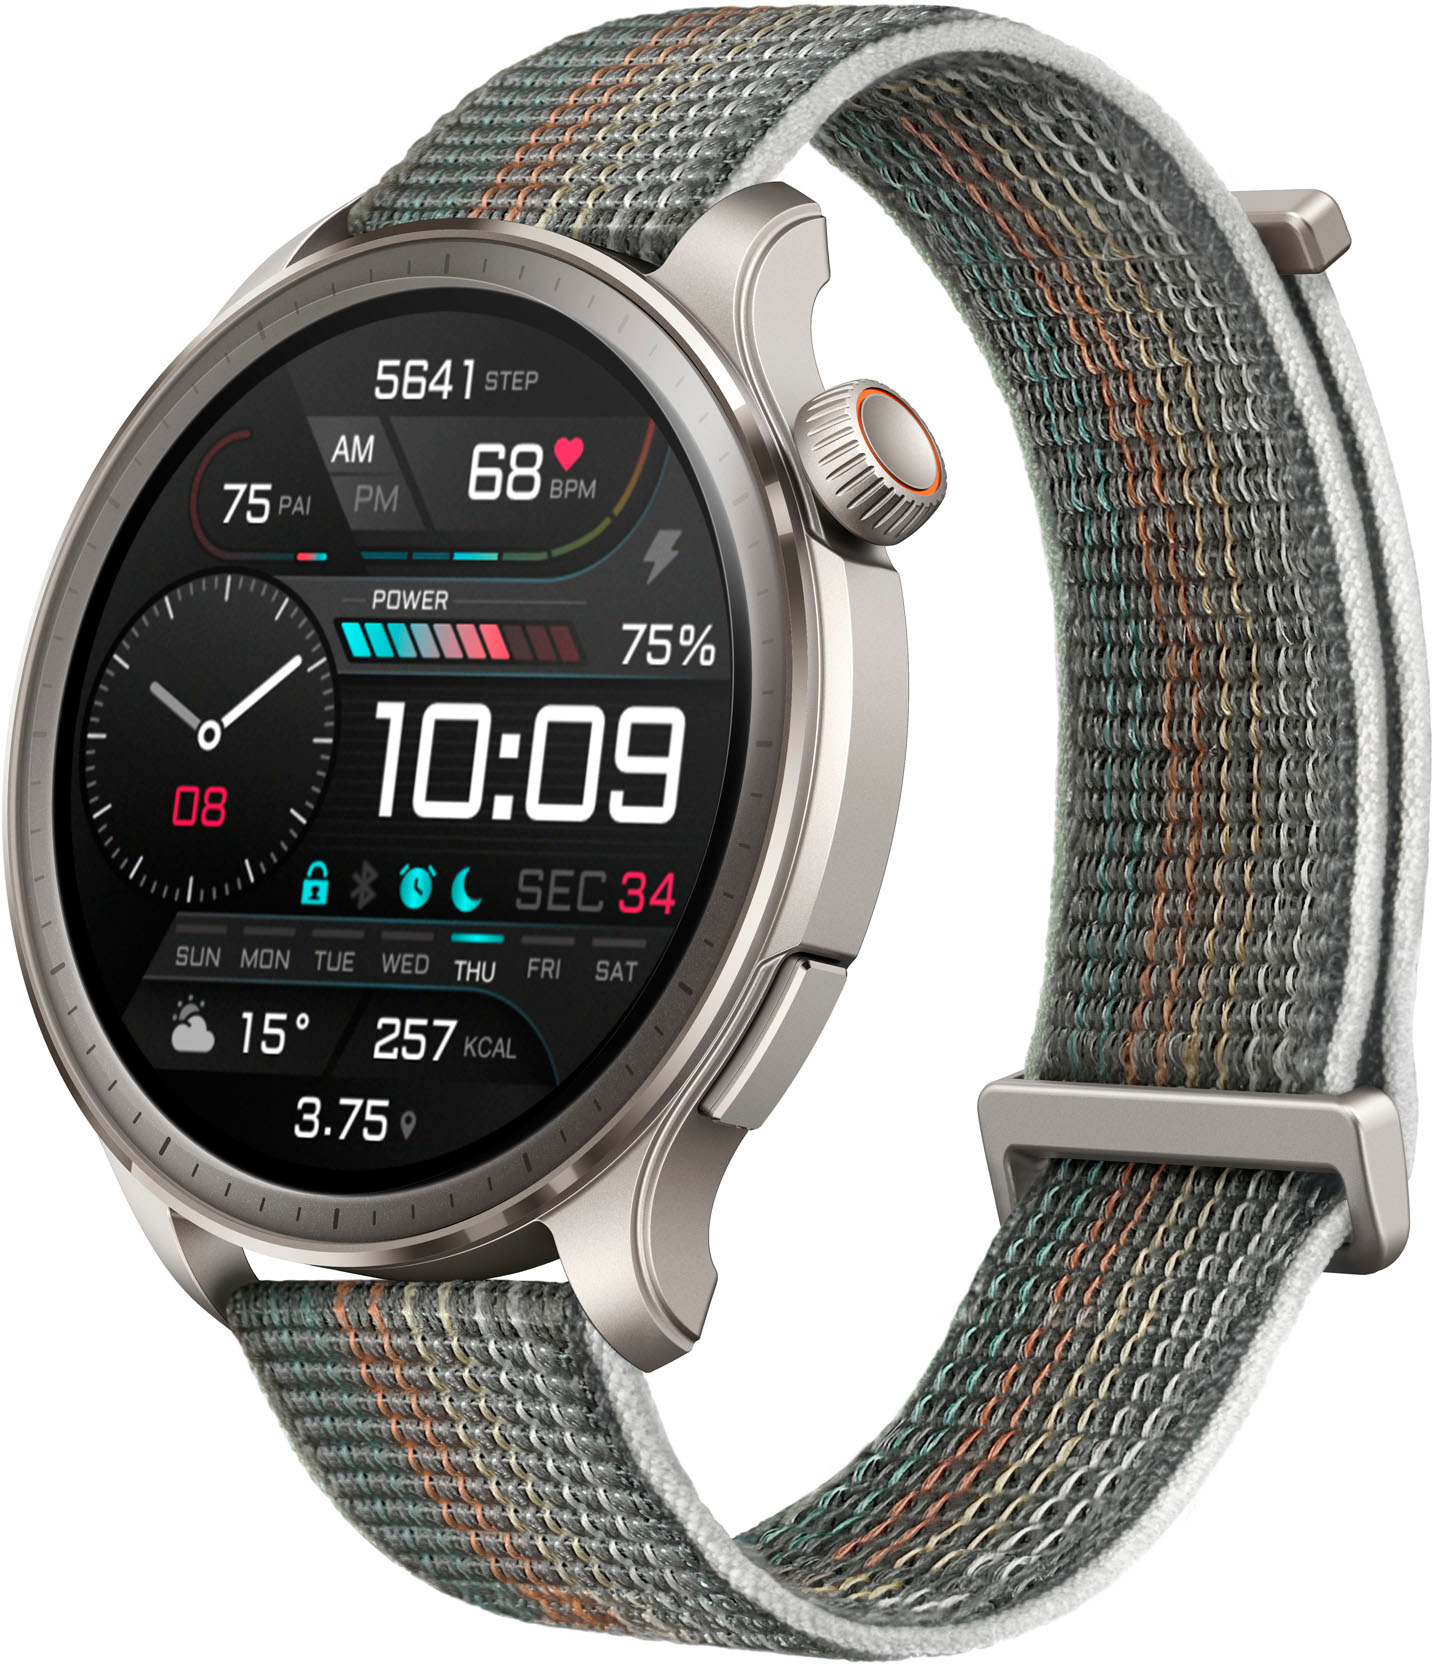 Amazfit Balance hands on: A sleek, stylish smartwatch with AI smarts